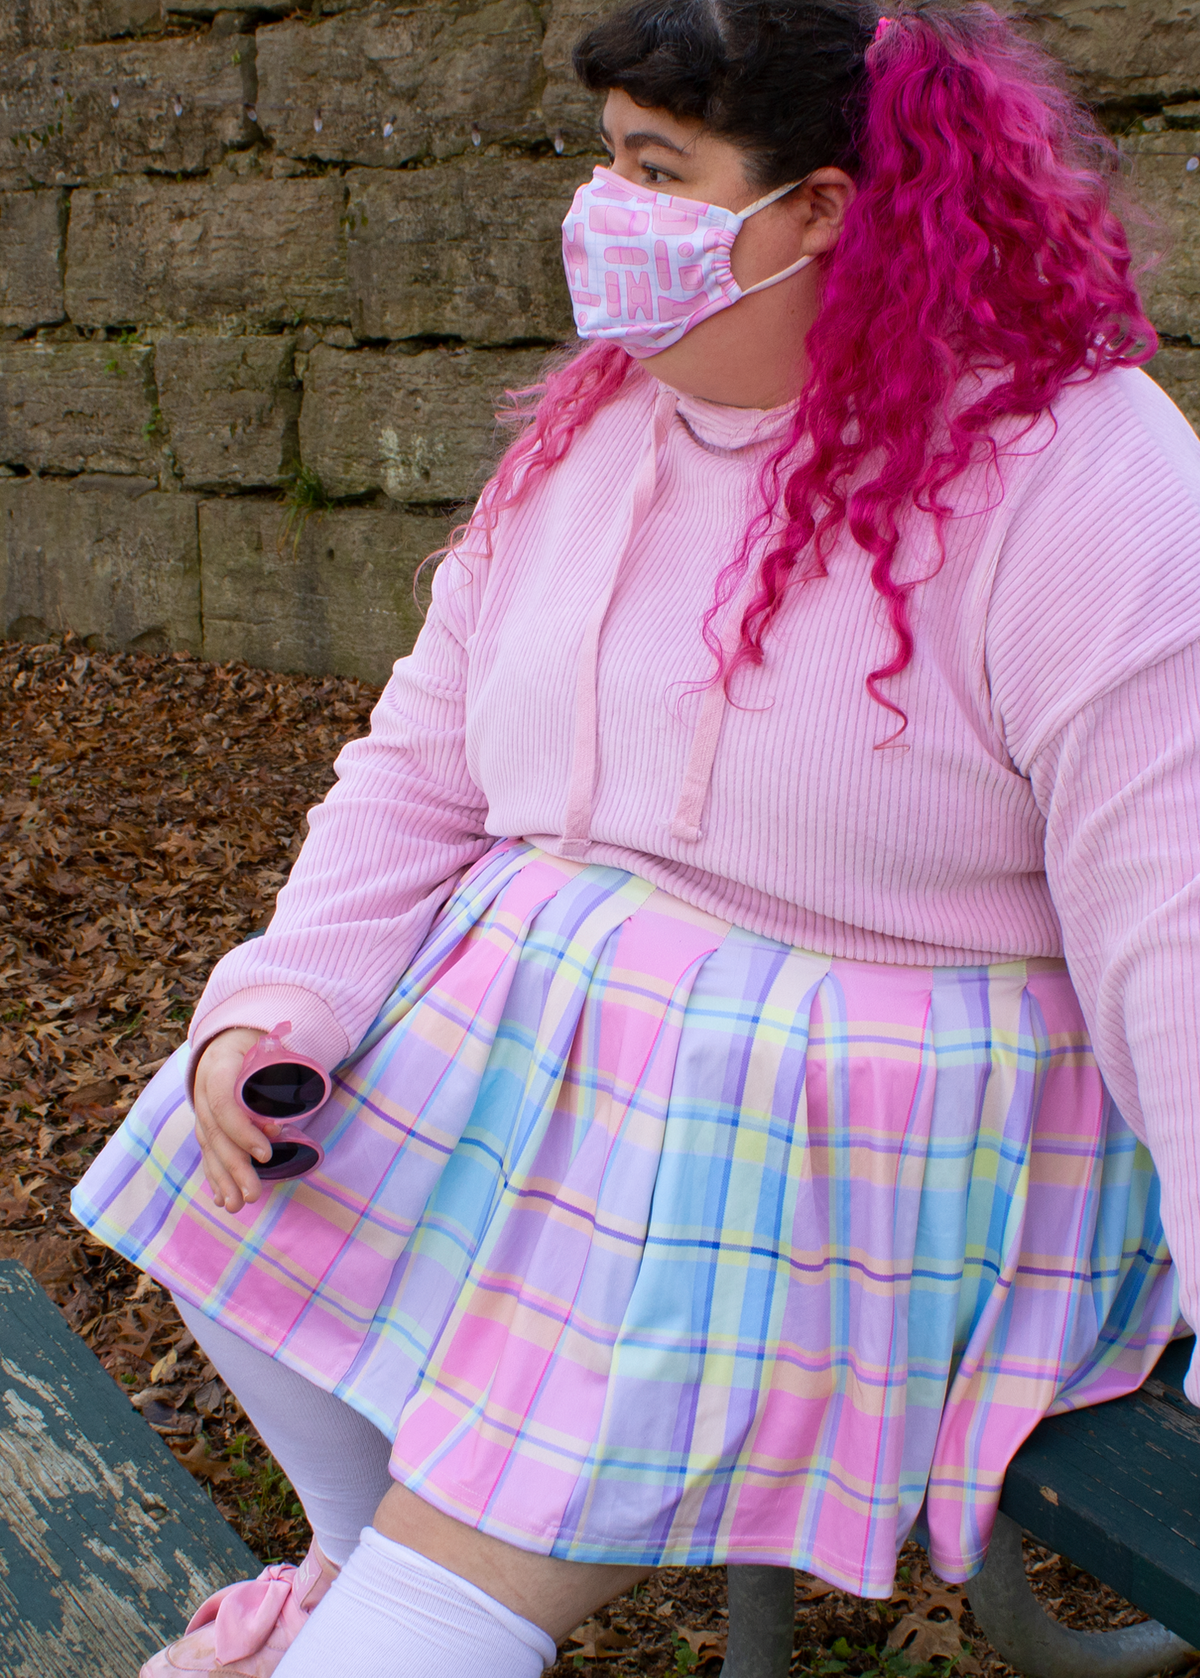 S plaid pleated mini skirt in konpeito